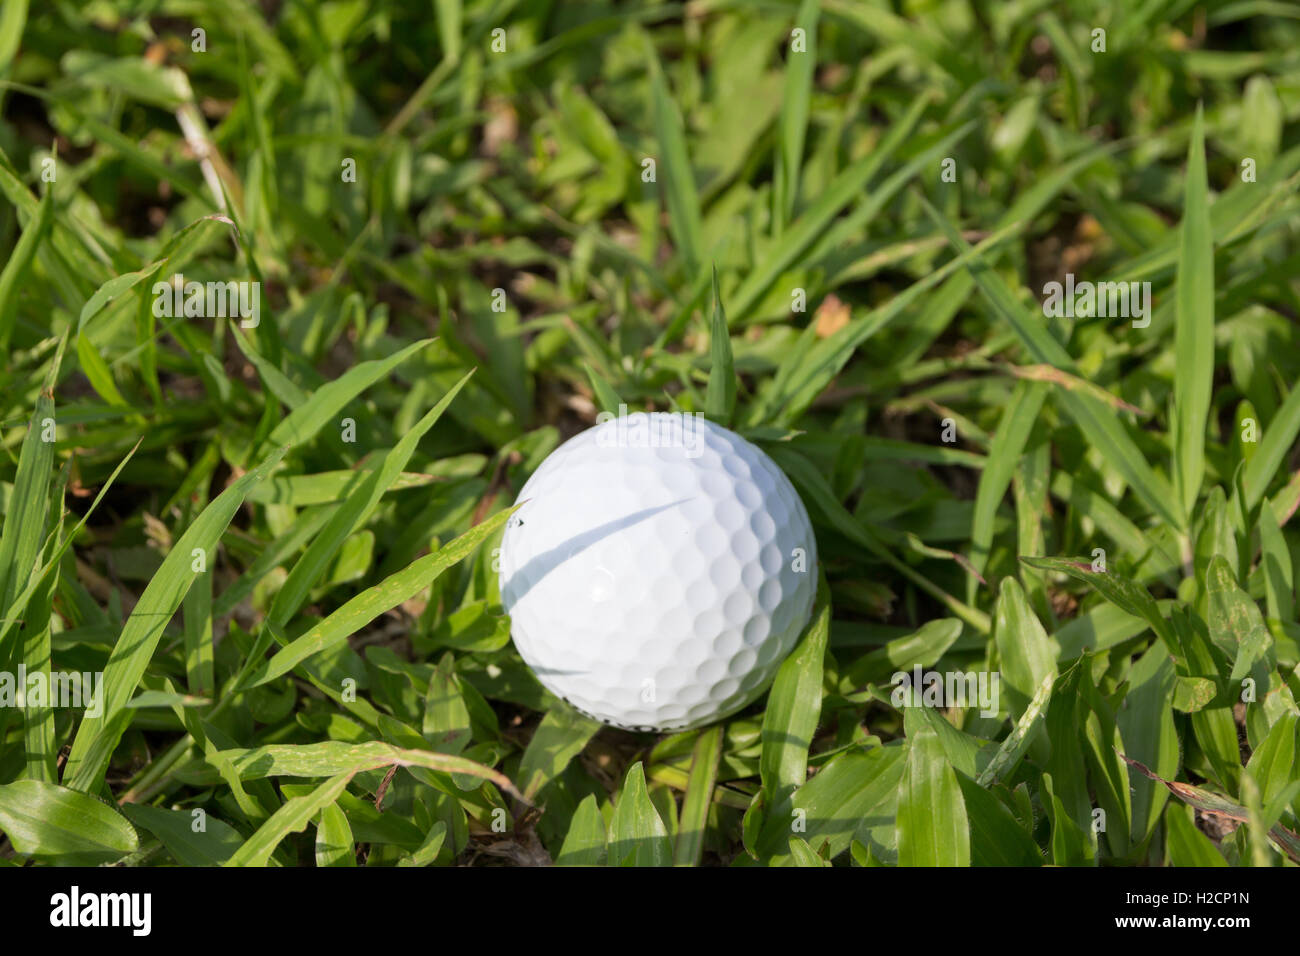 Pelota de golf en el pasto verde Foto de stock